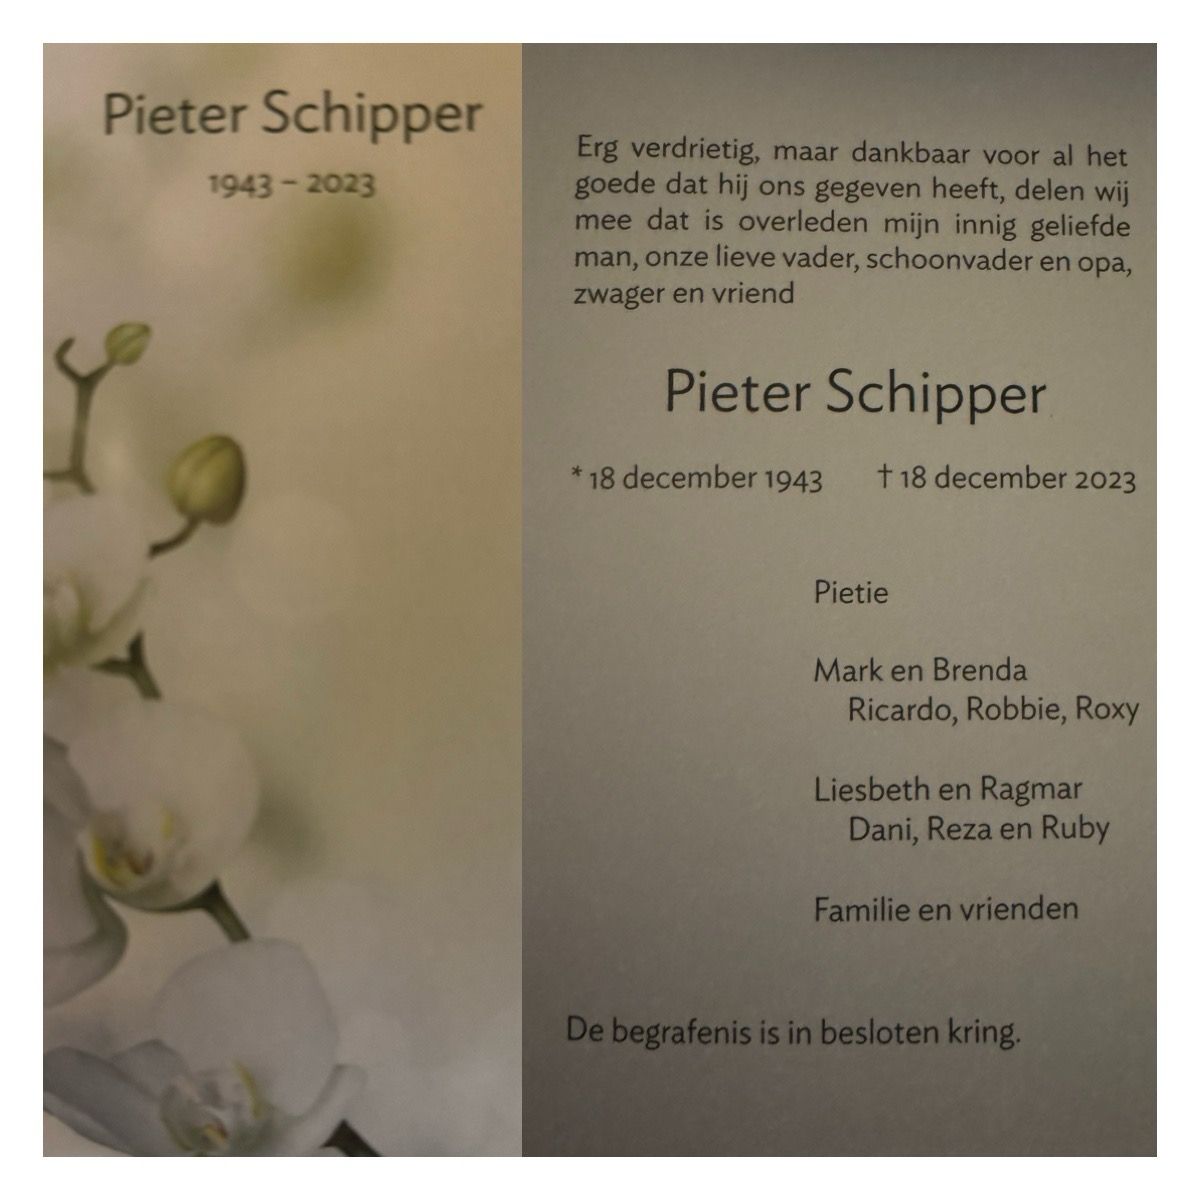 Piet Schipper